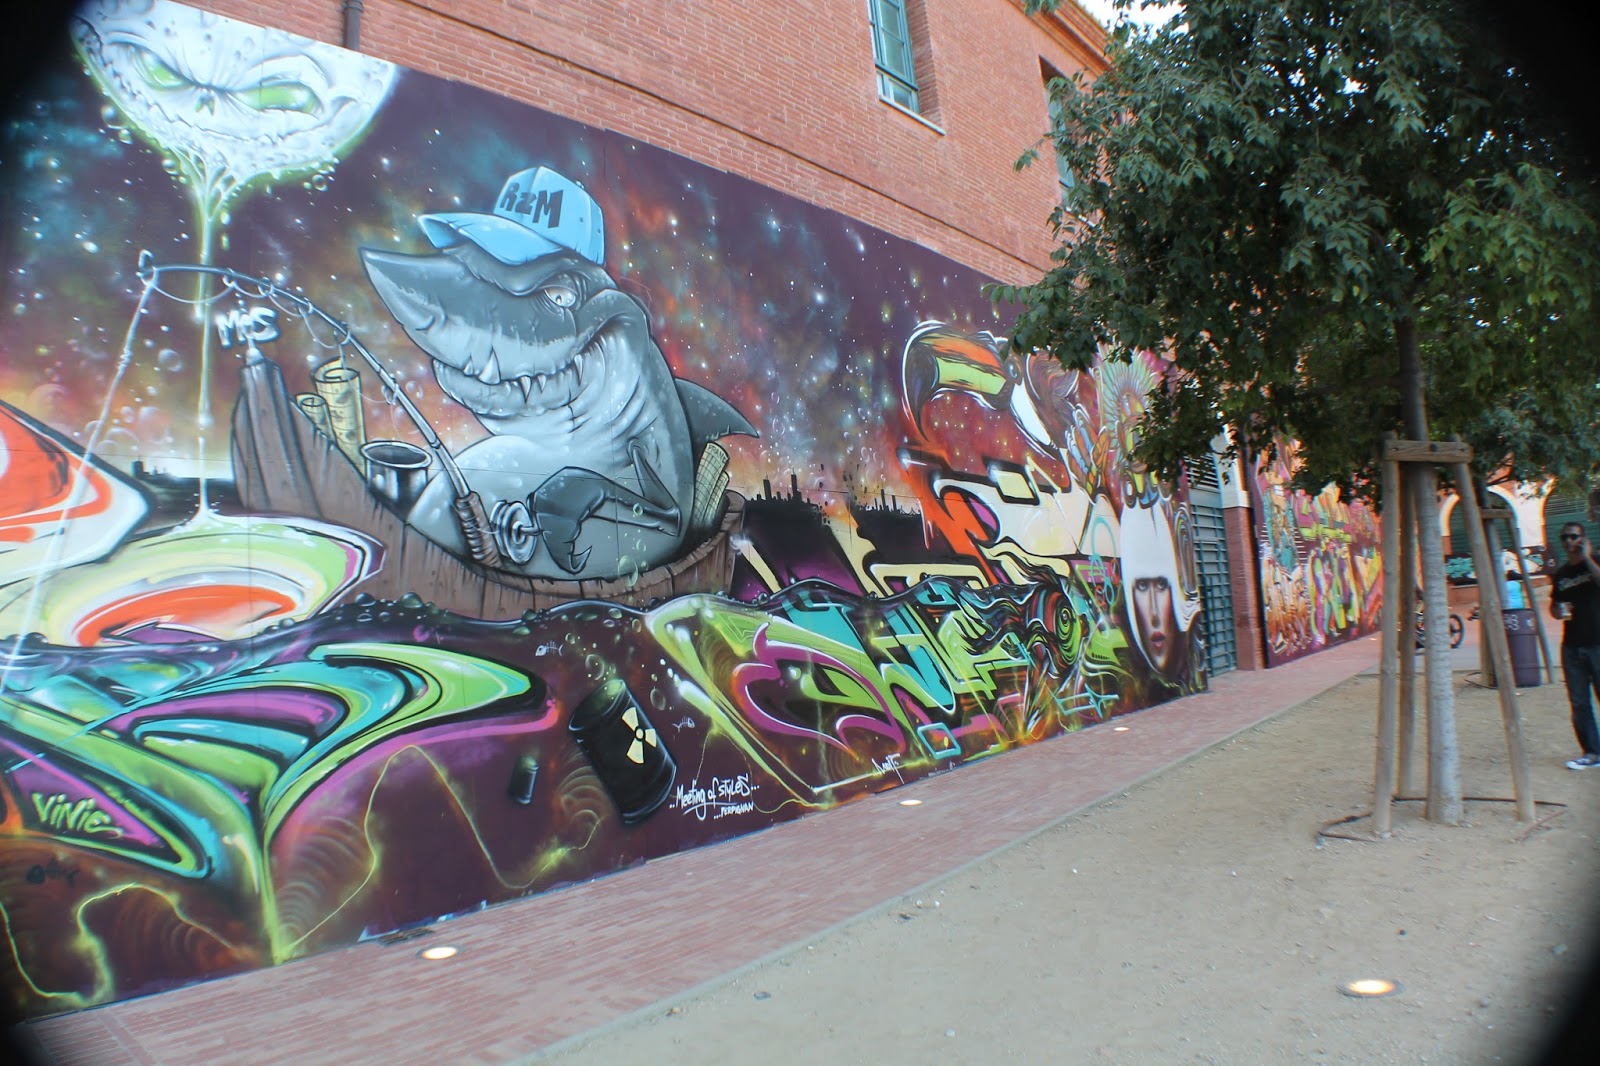 Nwk To Mia Graffiti Artist Paints Awesome Stuart Scott Mural In La